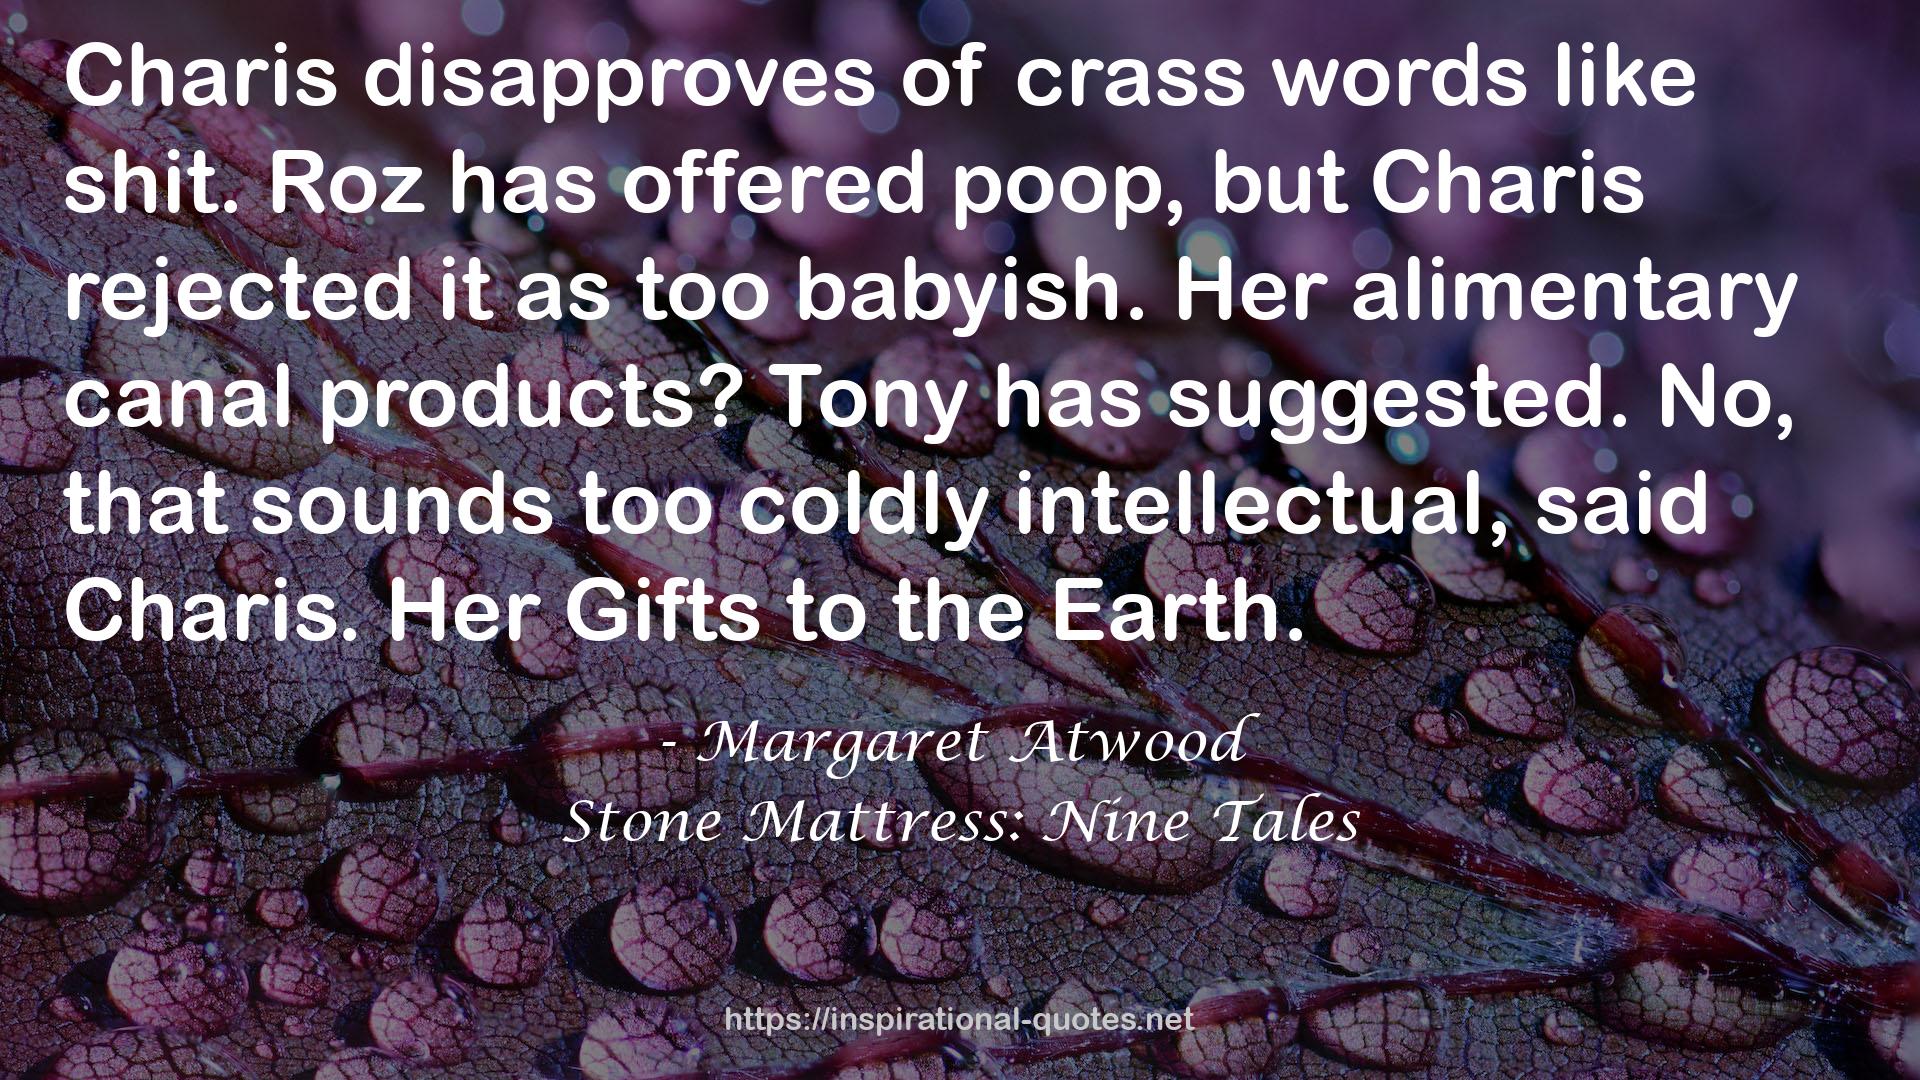 Stone Mattress: Nine Tales QUOTES